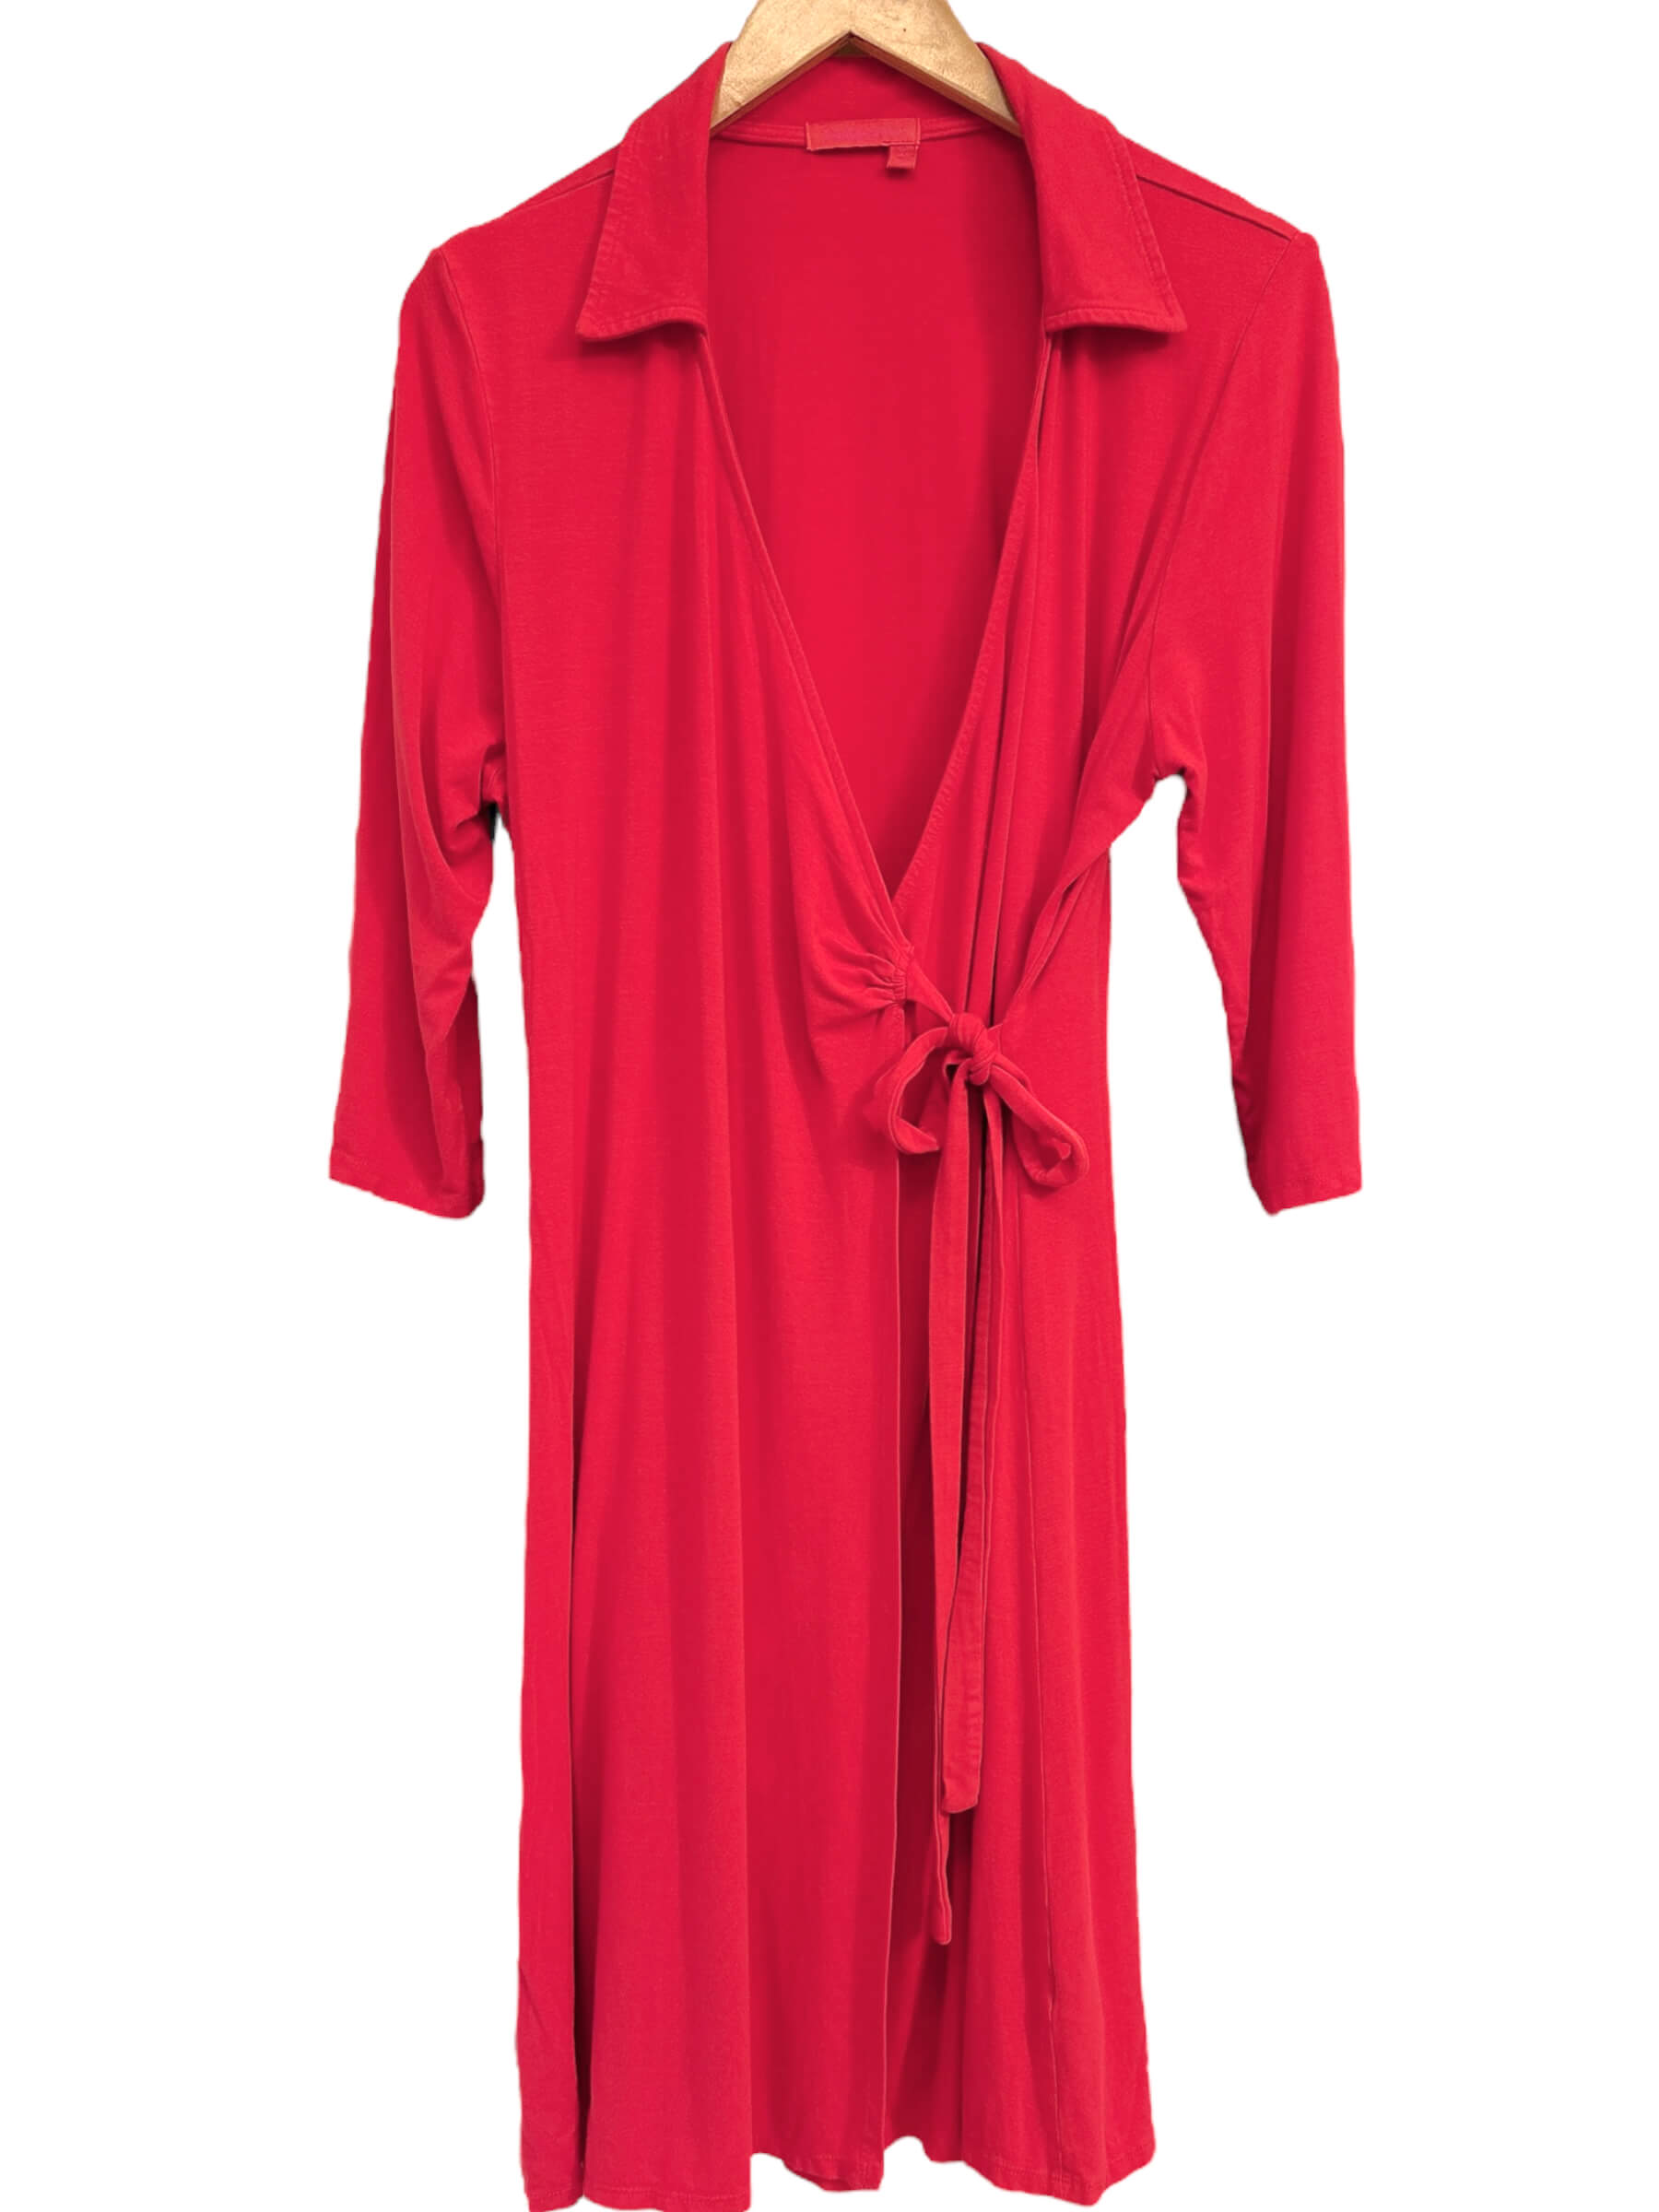 Warm Spring FRESH PRODUCE Sonia strawberry red jersey knit wrap dress